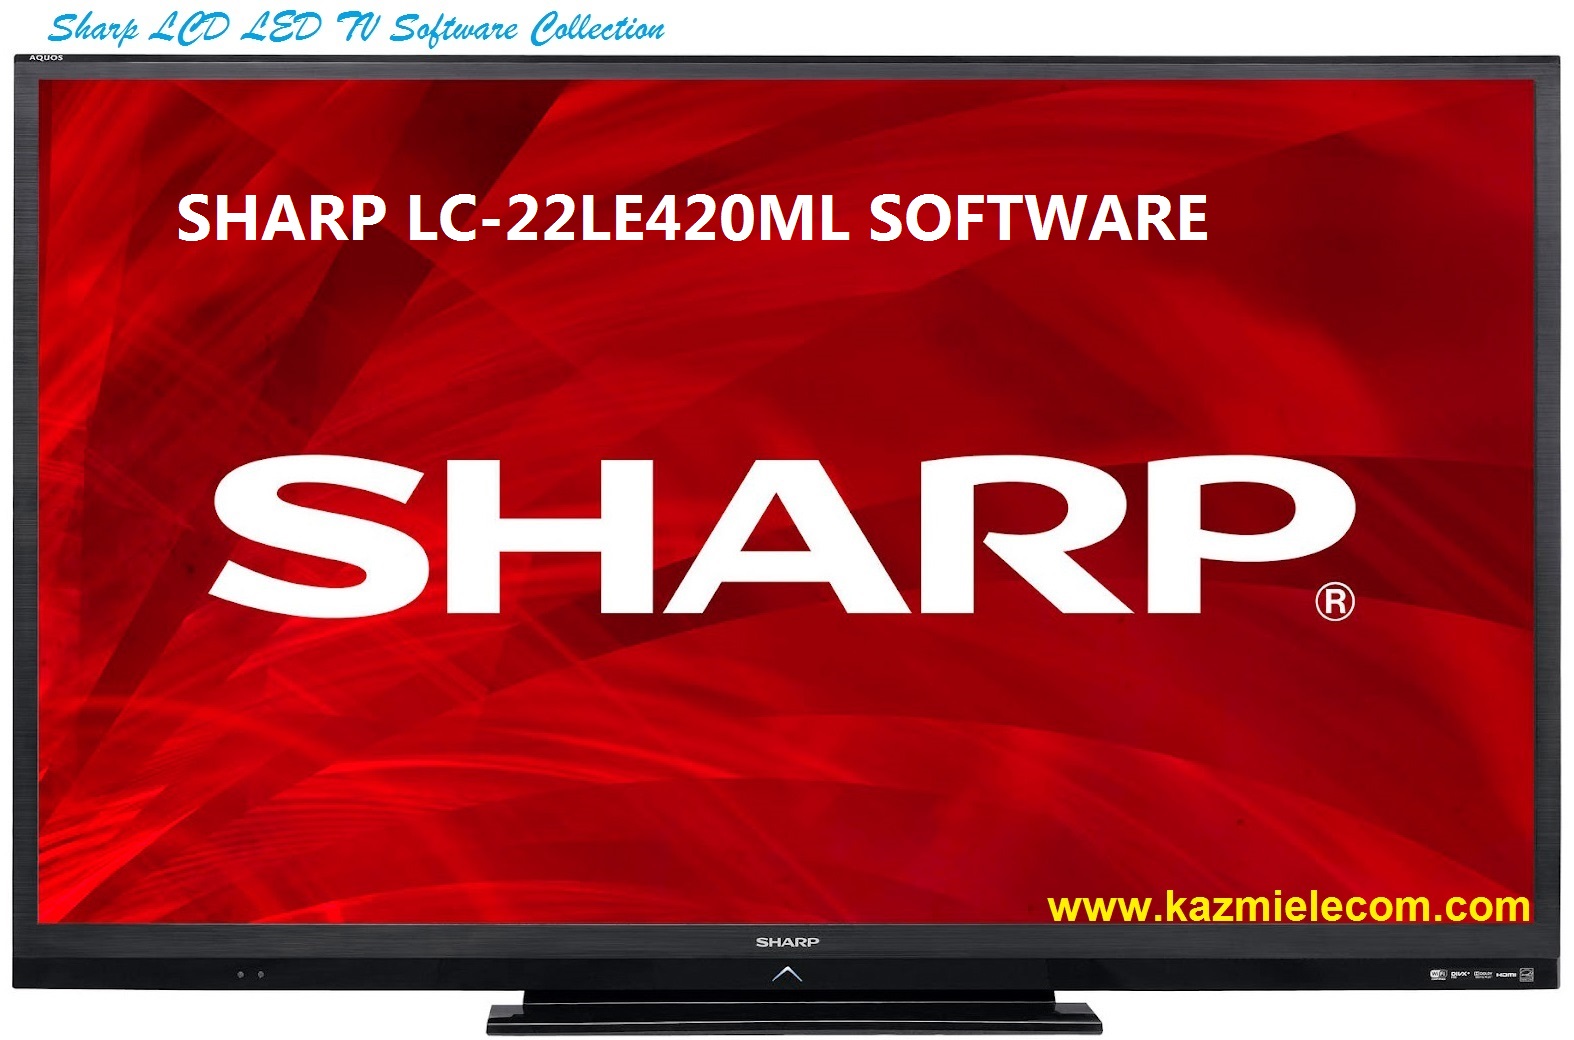 Sharp Lc-22Le420Ml